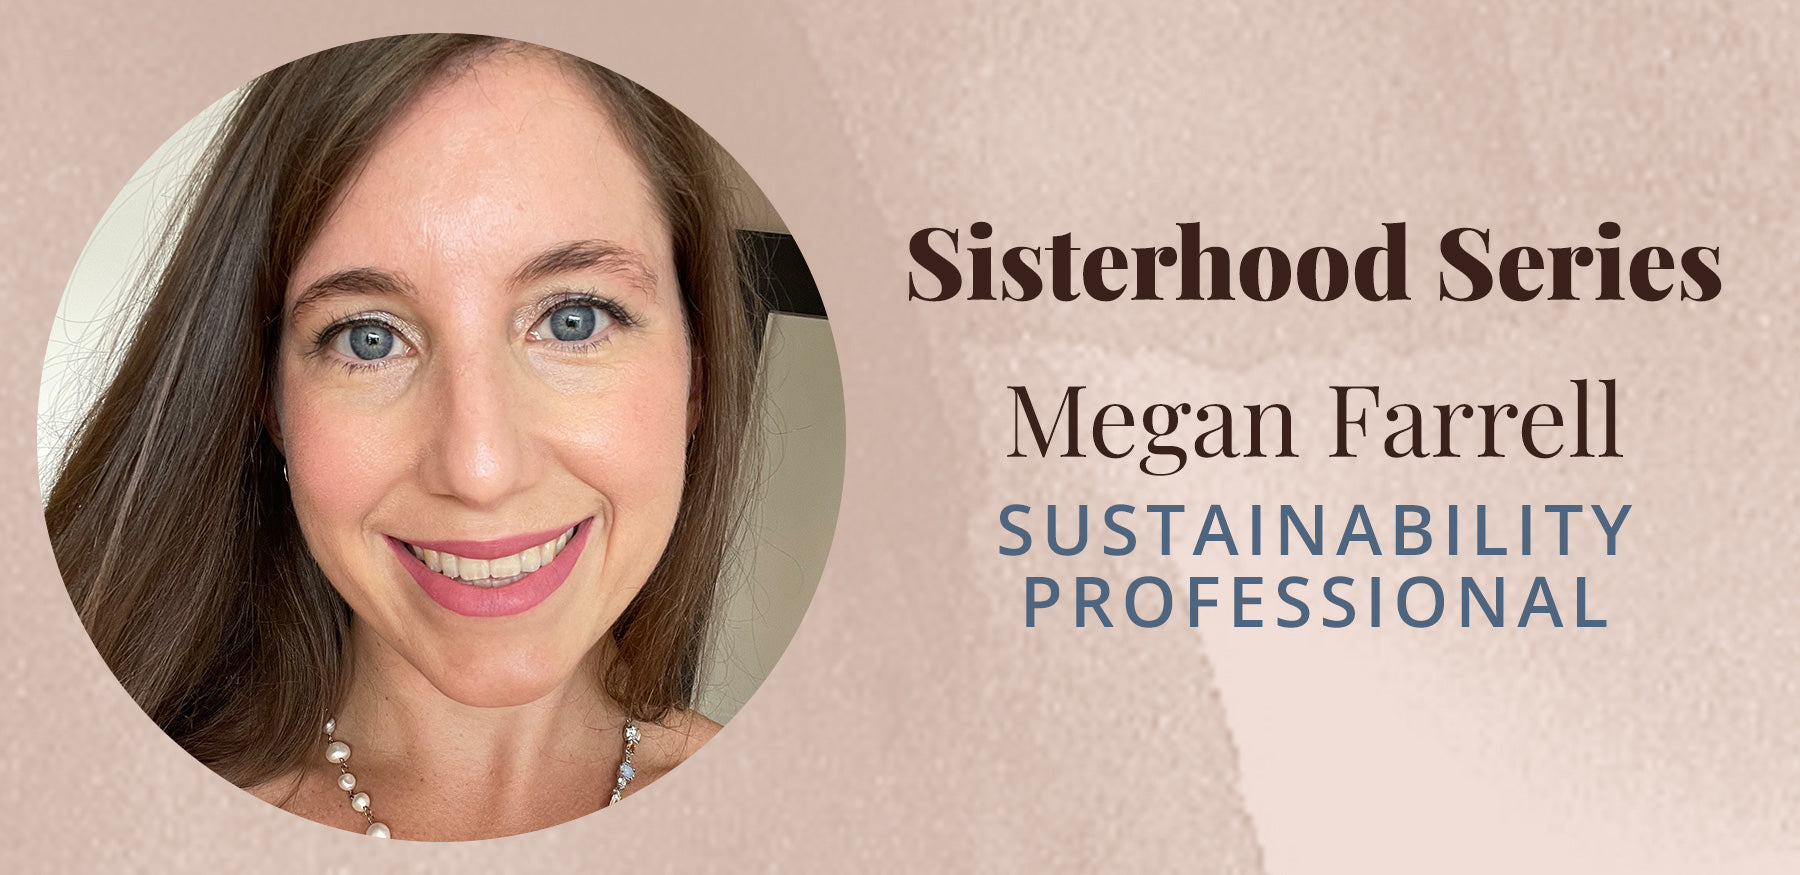 The Sisterhood Series with Megan Farrell